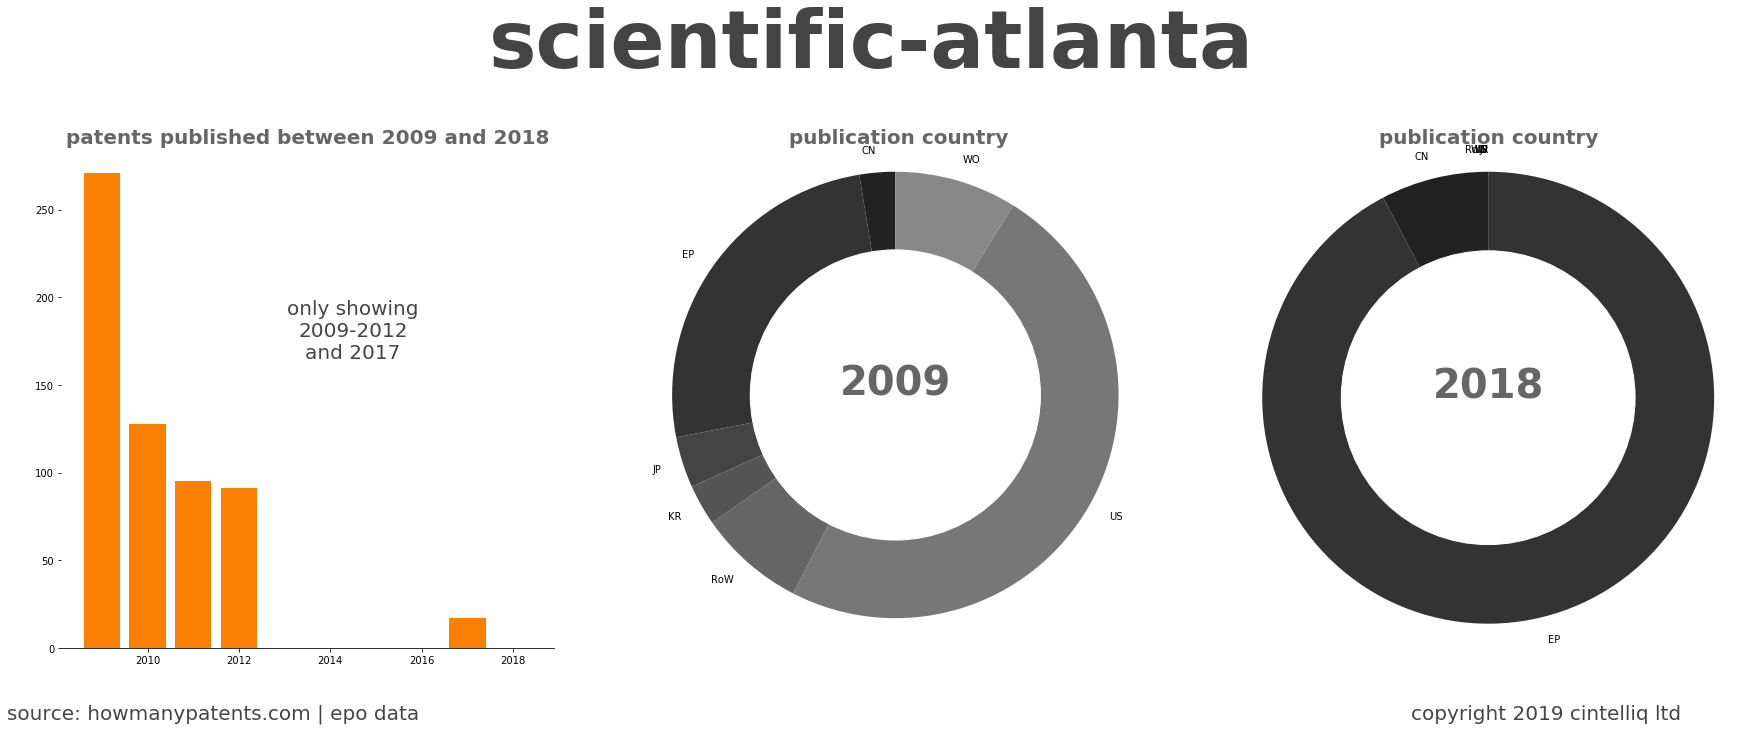 summary of patents for Scientific-Atlanta